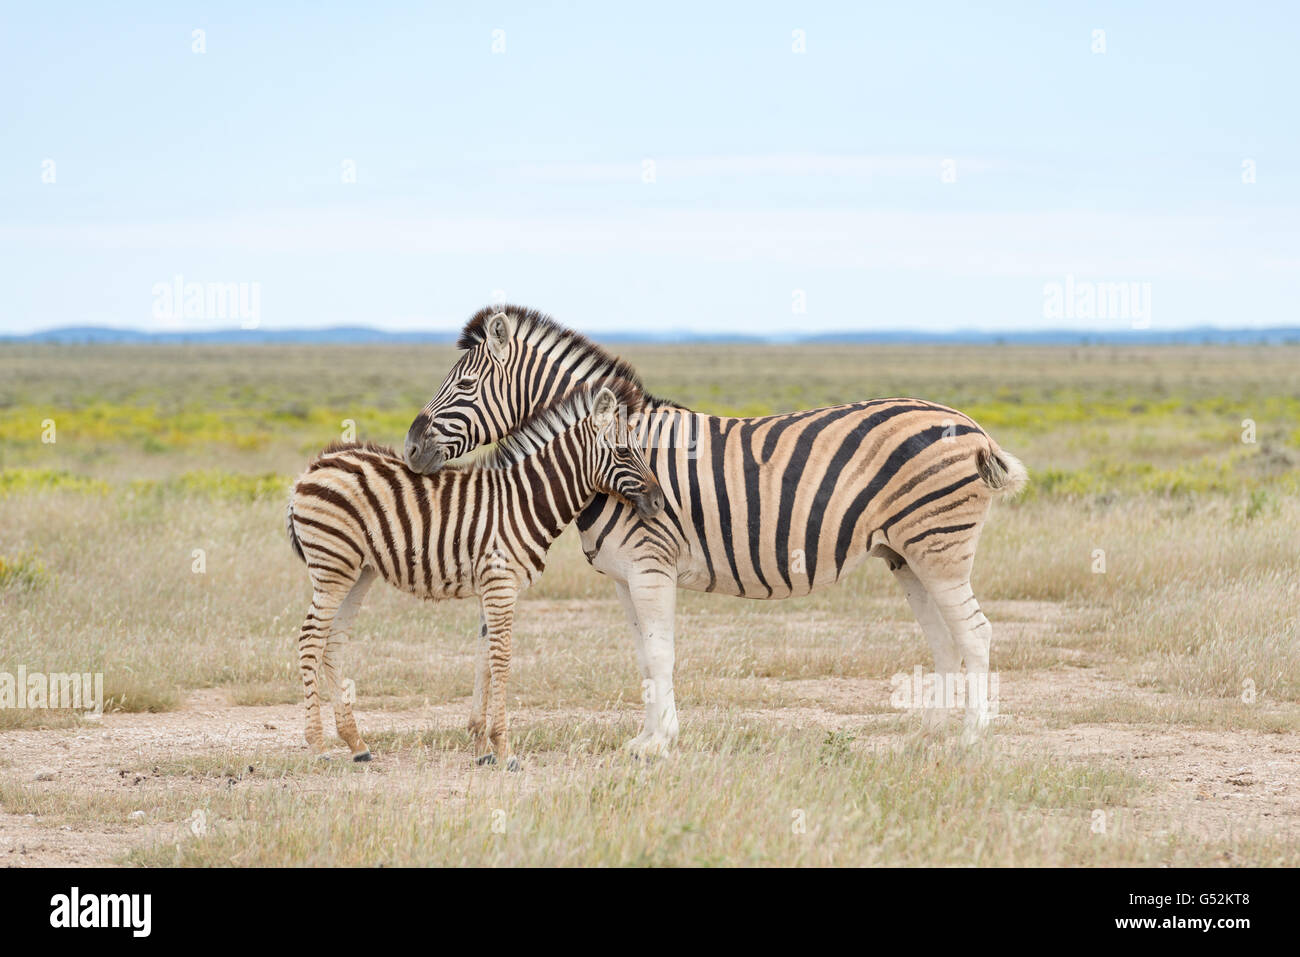 Namibia, Oshana, Etosha National Park, Zebramutter with child, plains zebra  (Equus quagga) or horse-drawn zebra Stock Photo - Alamy